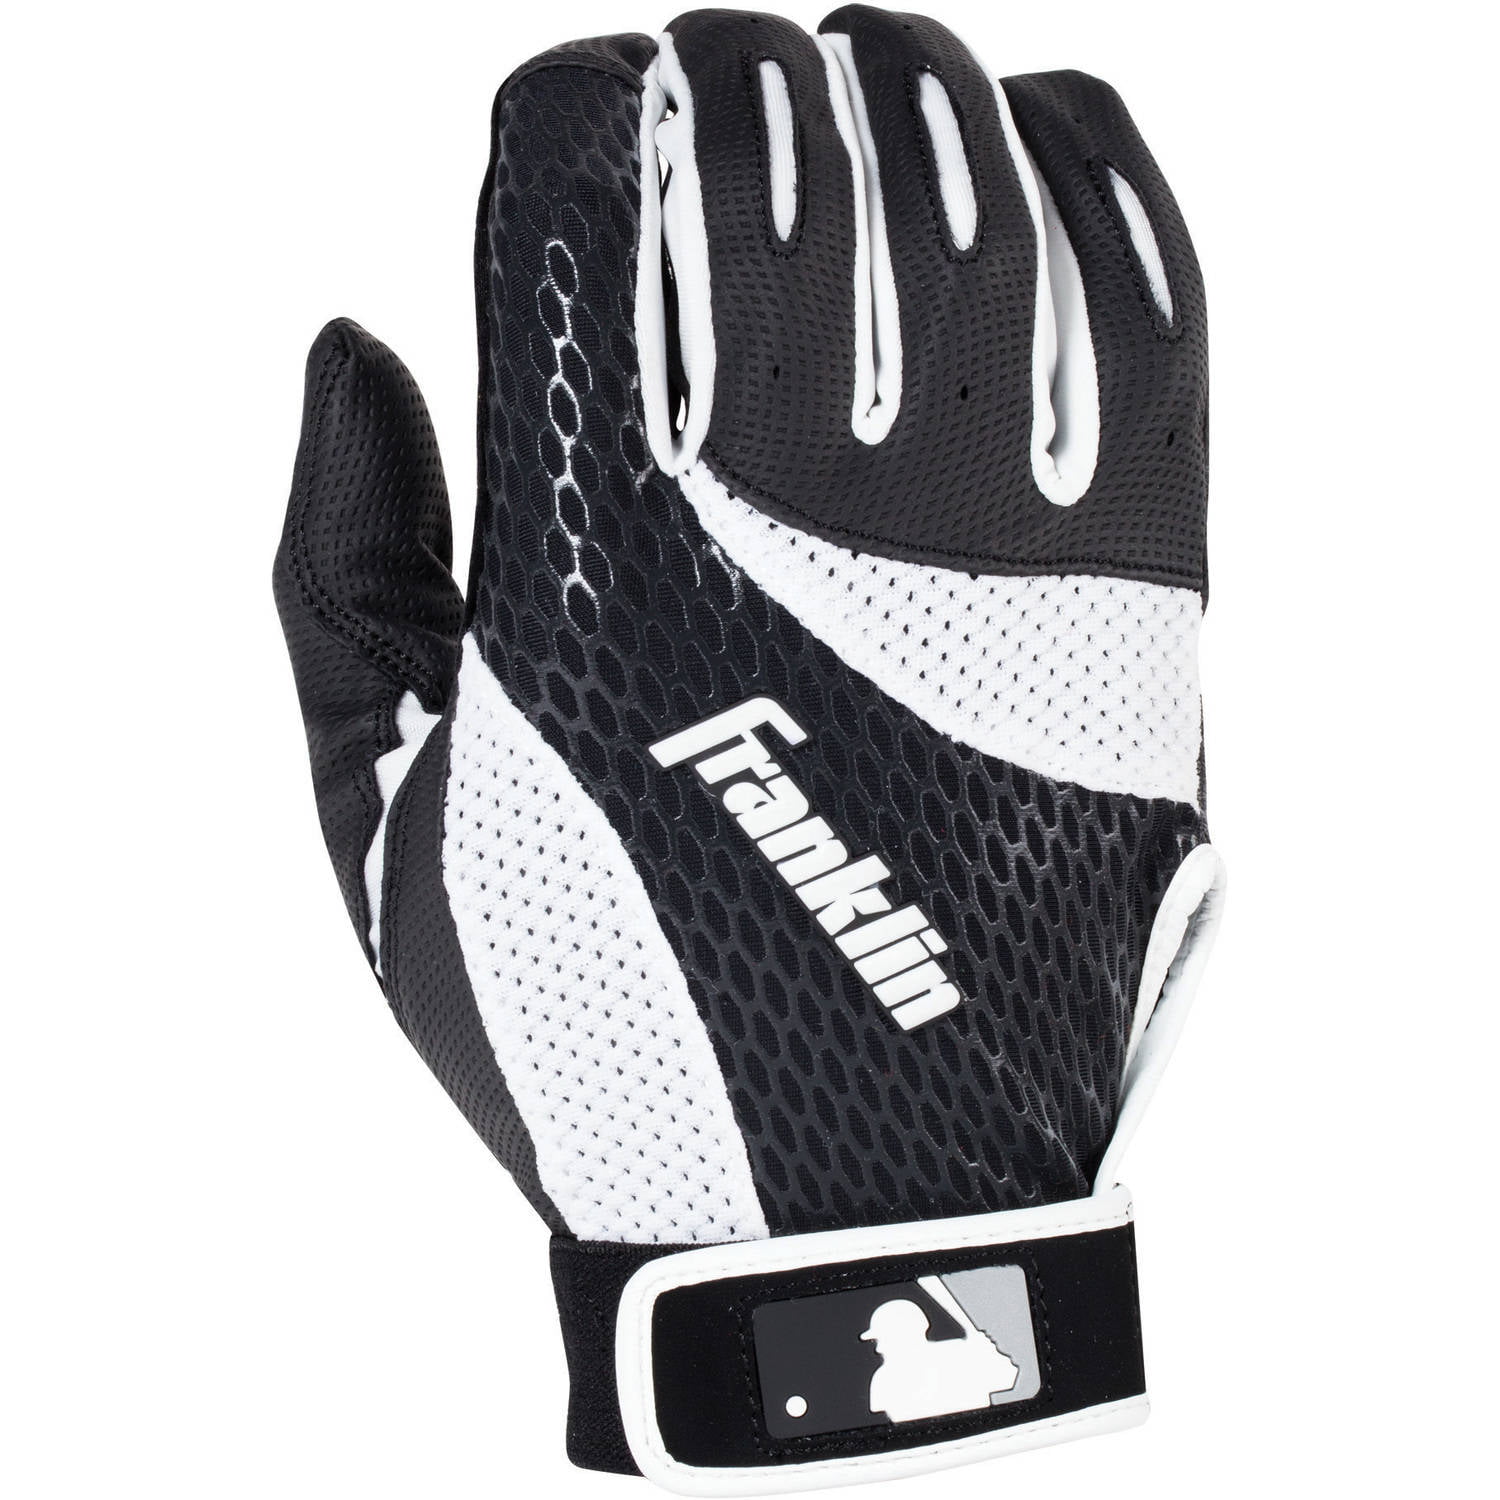 Franklin 2nd Skinz Baseball Batting Gloves Black/White Authentic New size M 